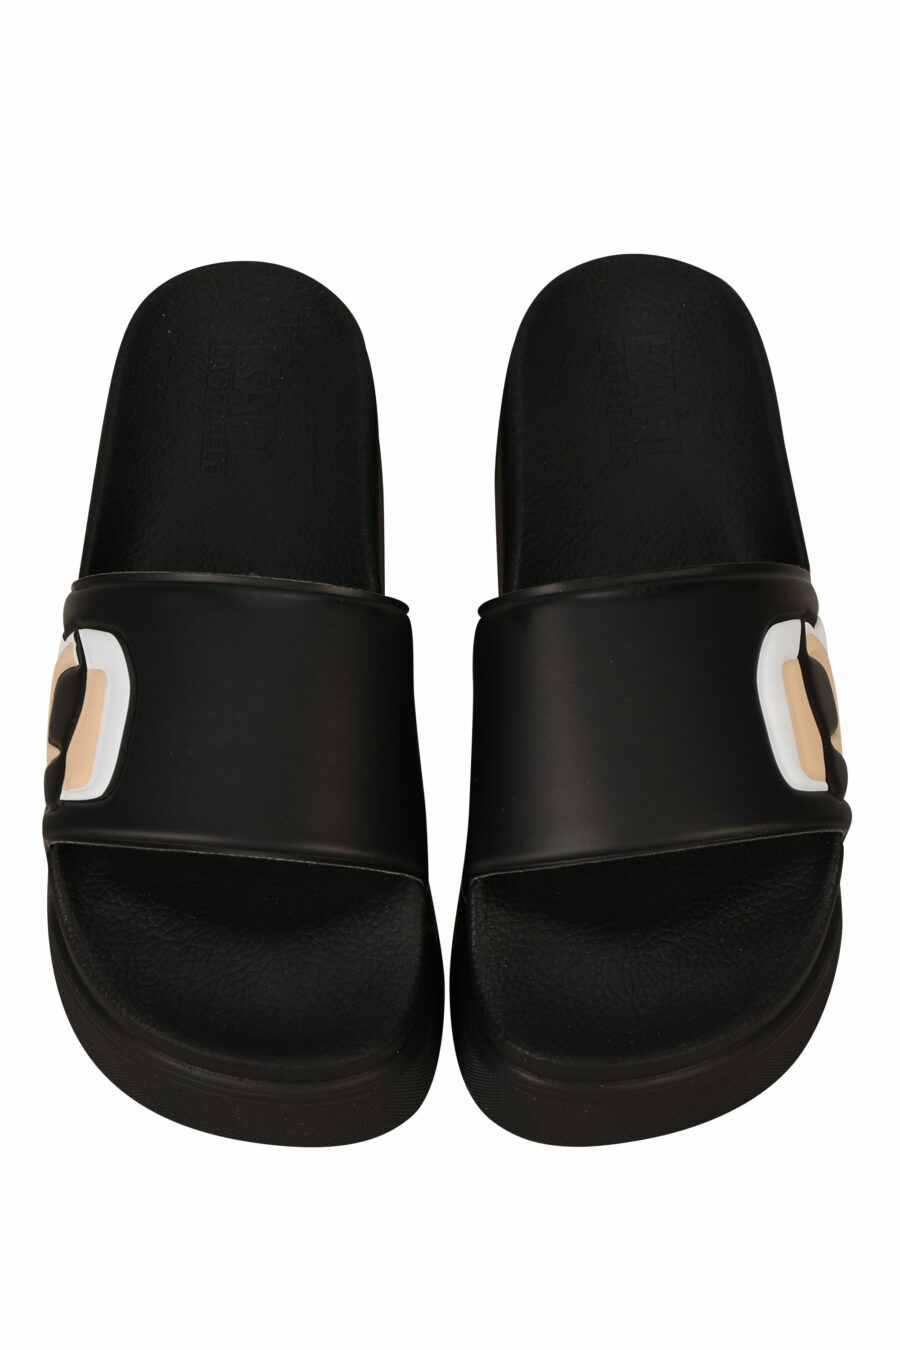 Sandales à plateforme noires avec logo "karl" - 5059529404771 4